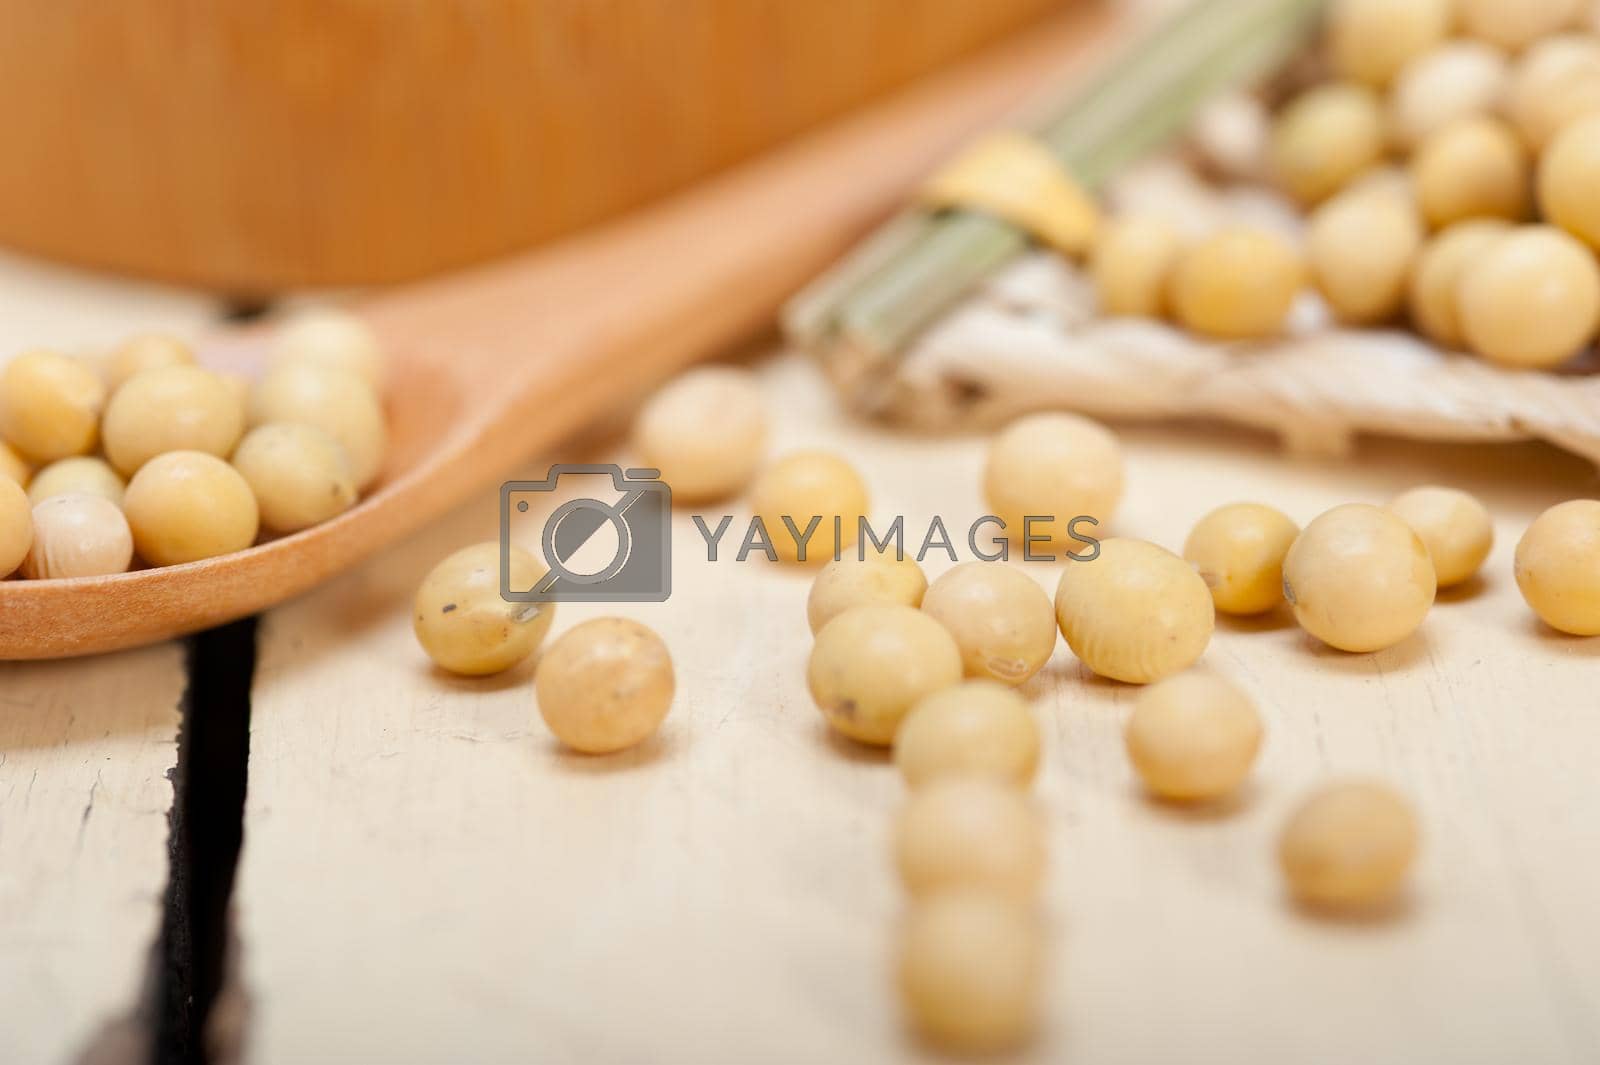 Royalty free image of organic soya beans  by keko64